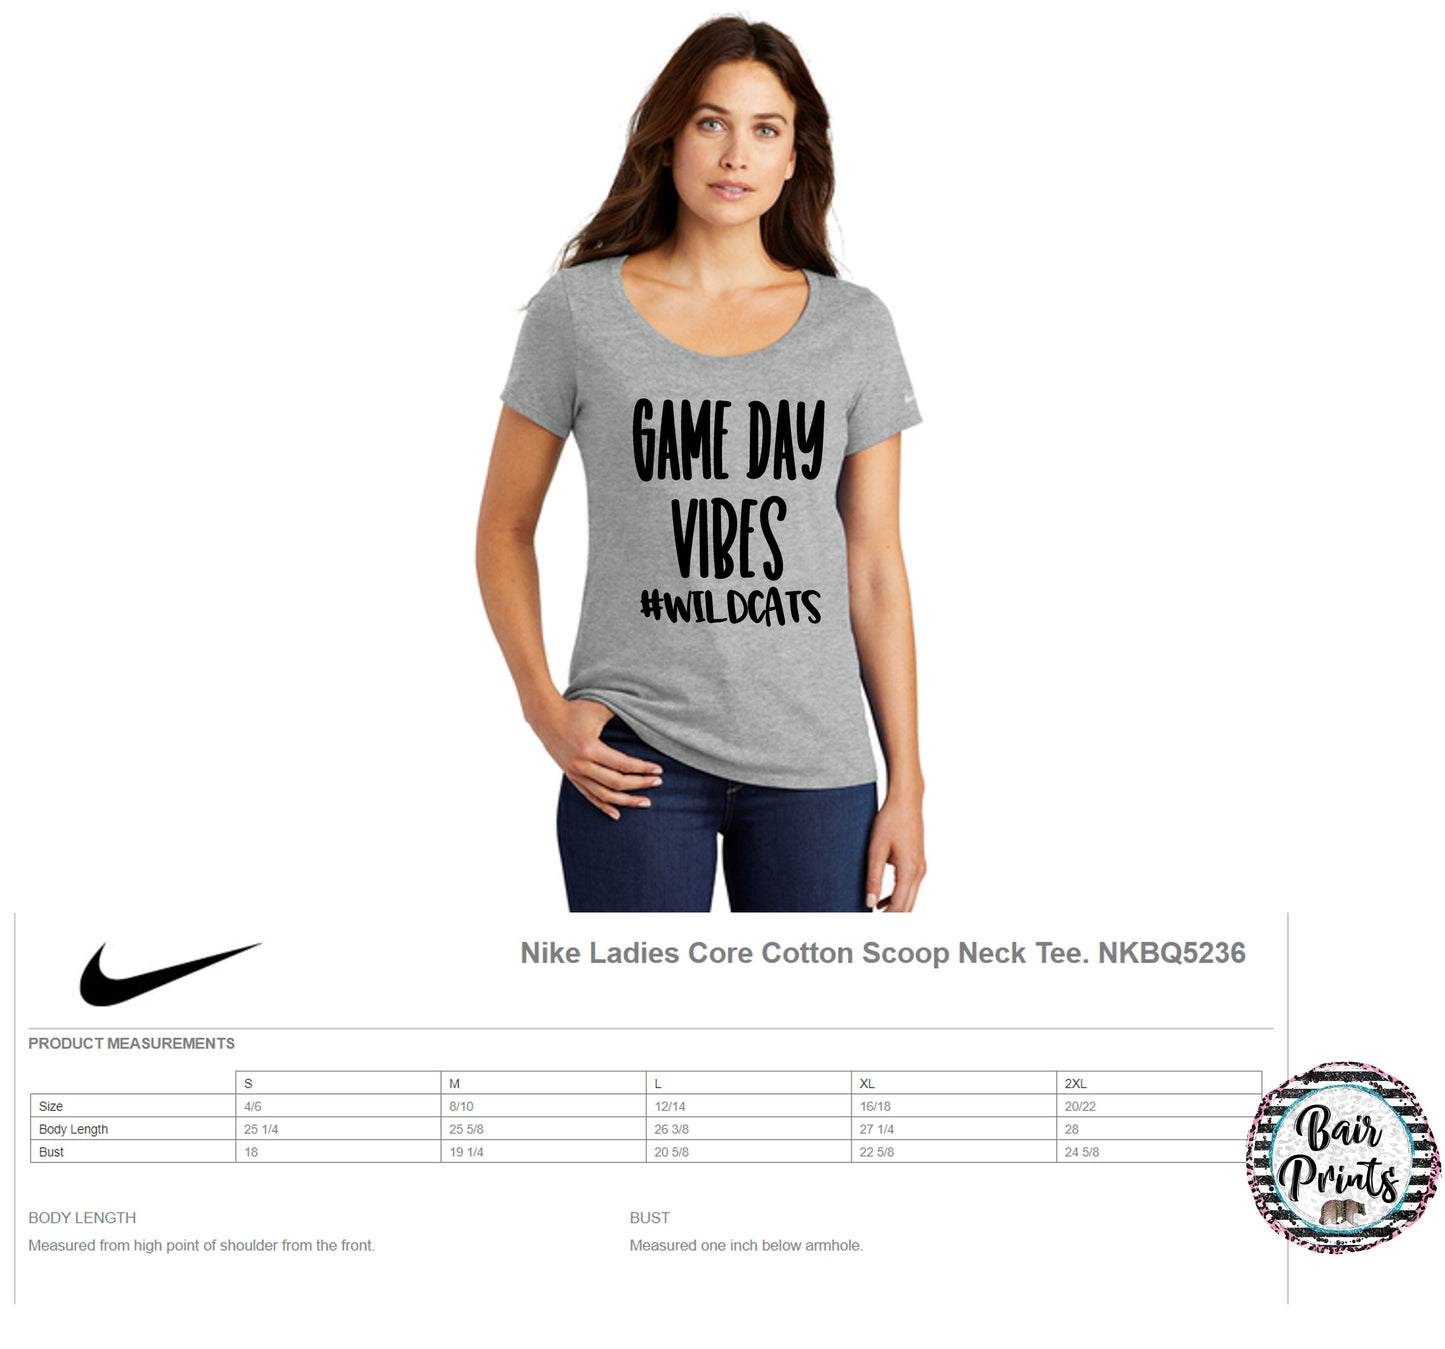 Game Day Vibes, Womens Nike Scoop Neck Tee. - Bair Prints